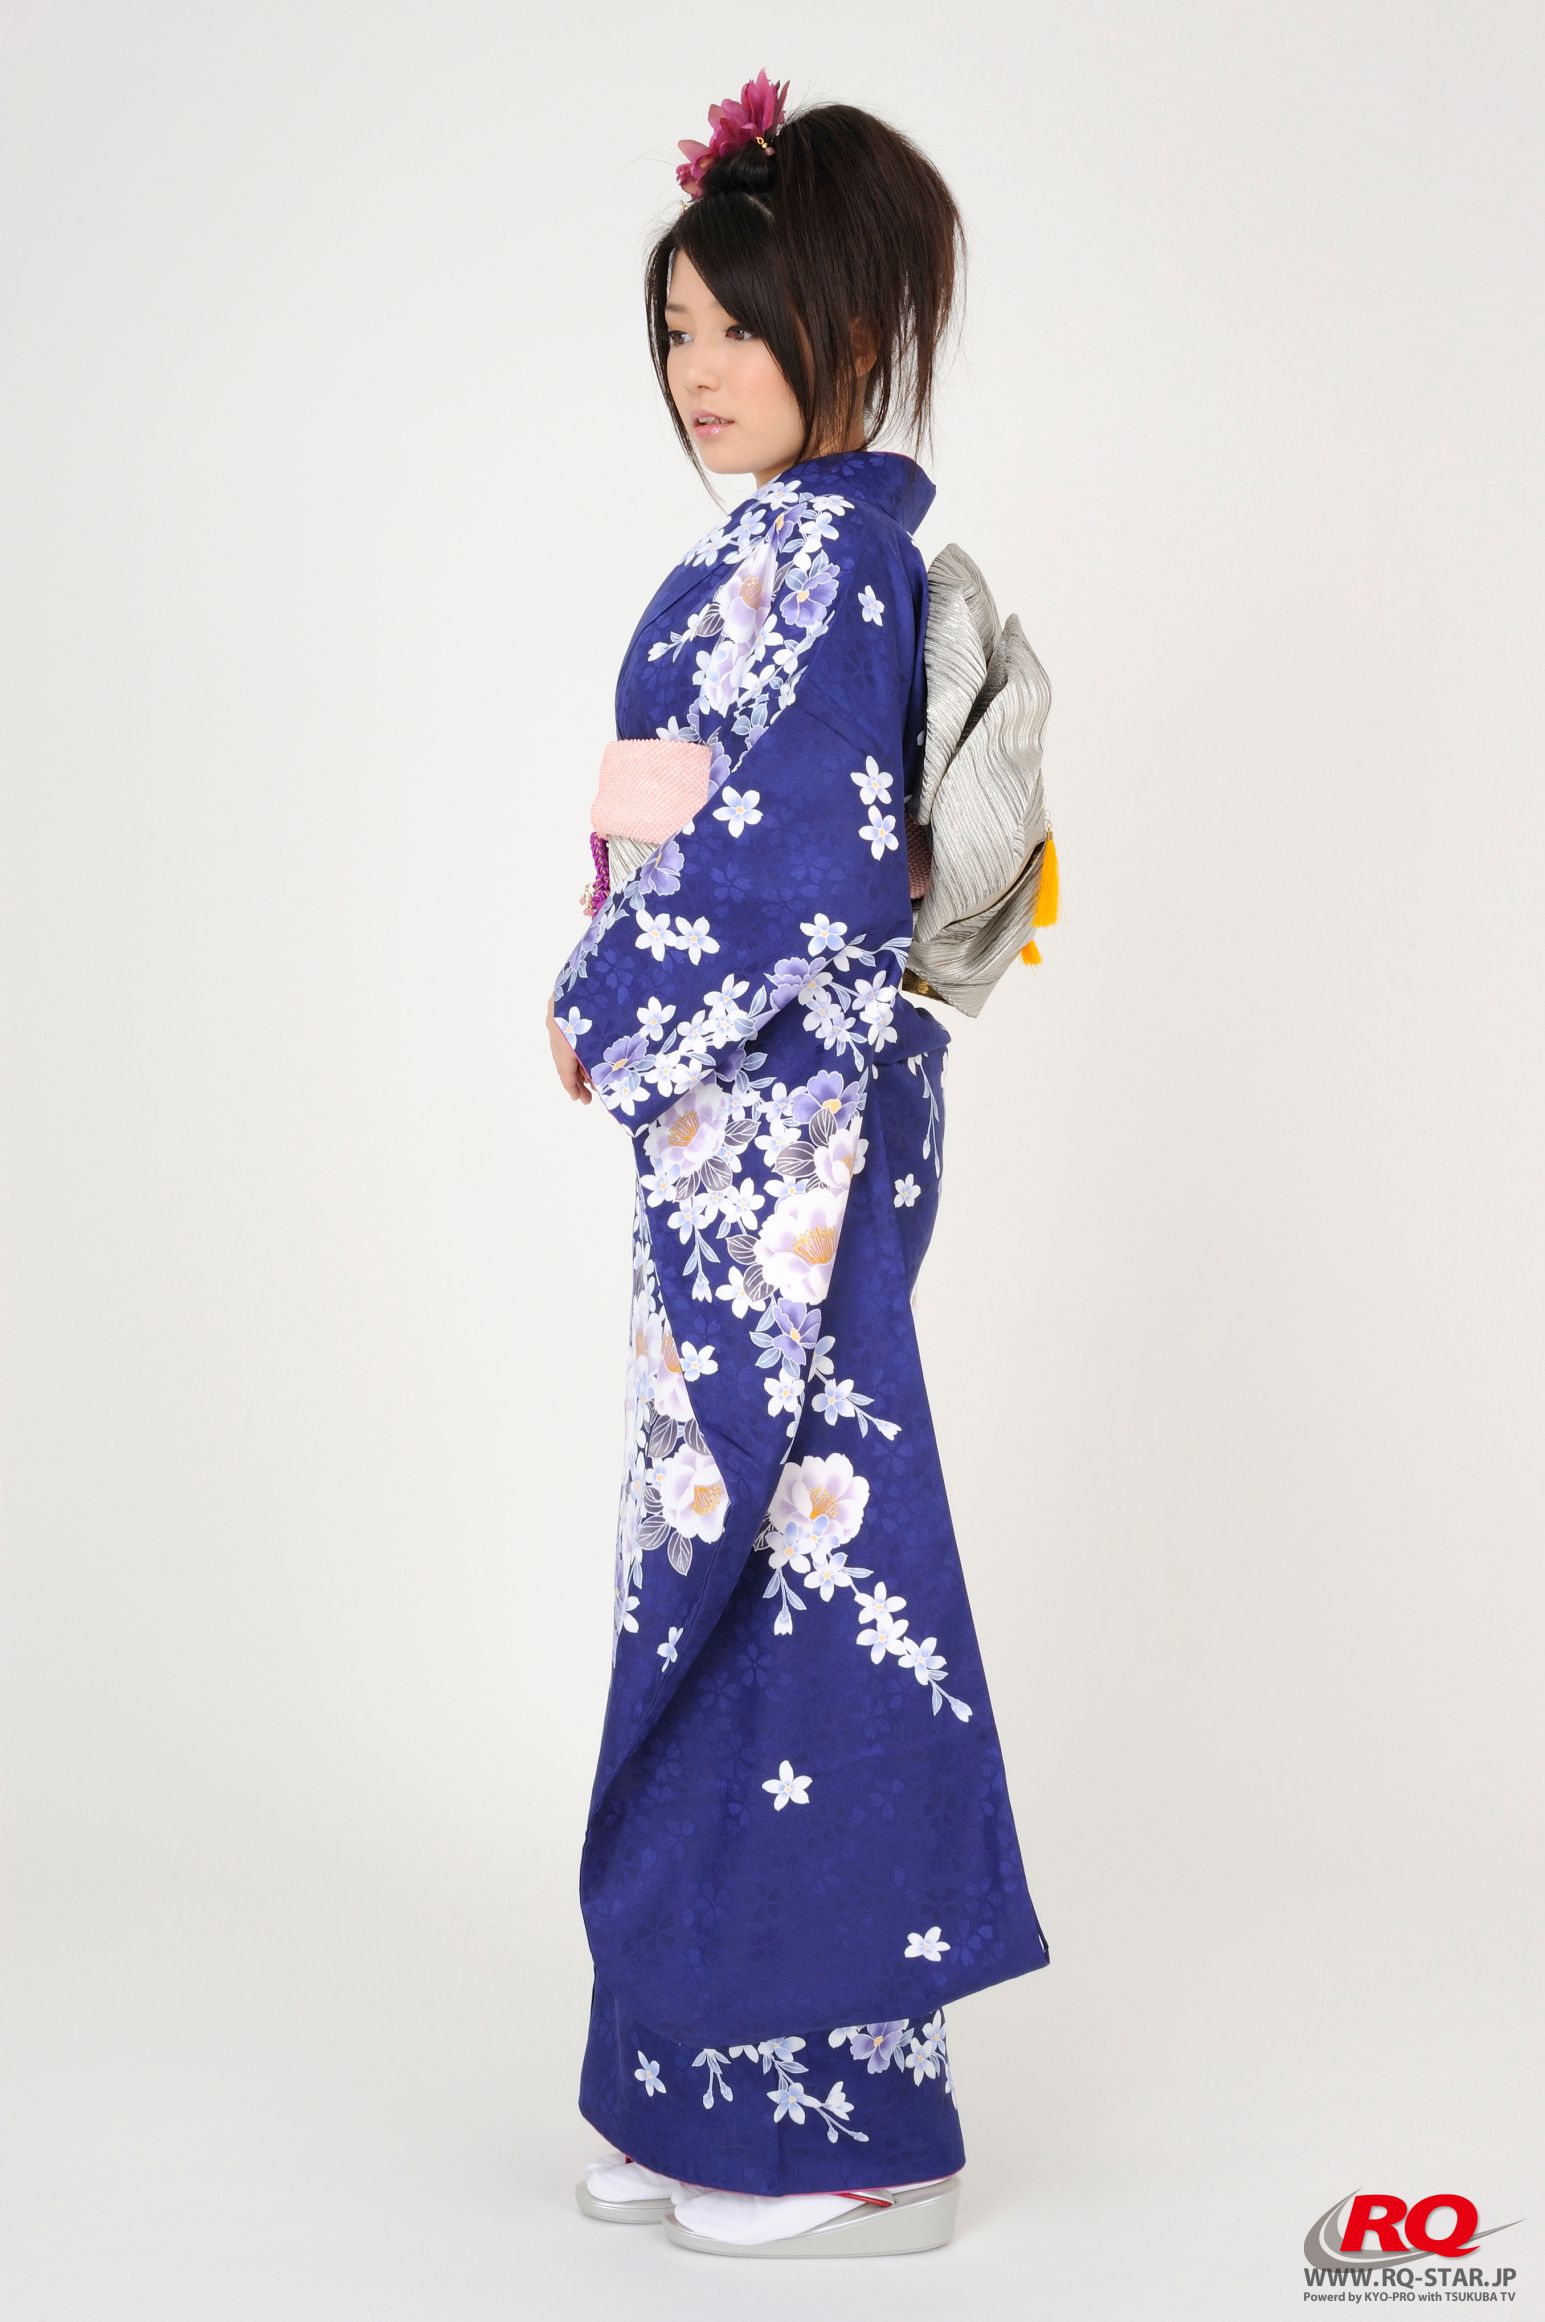 [RQ-STAR] NO.00068 古崎瞳 謹賀新年 Kimono – Happy New Year 和服系列28